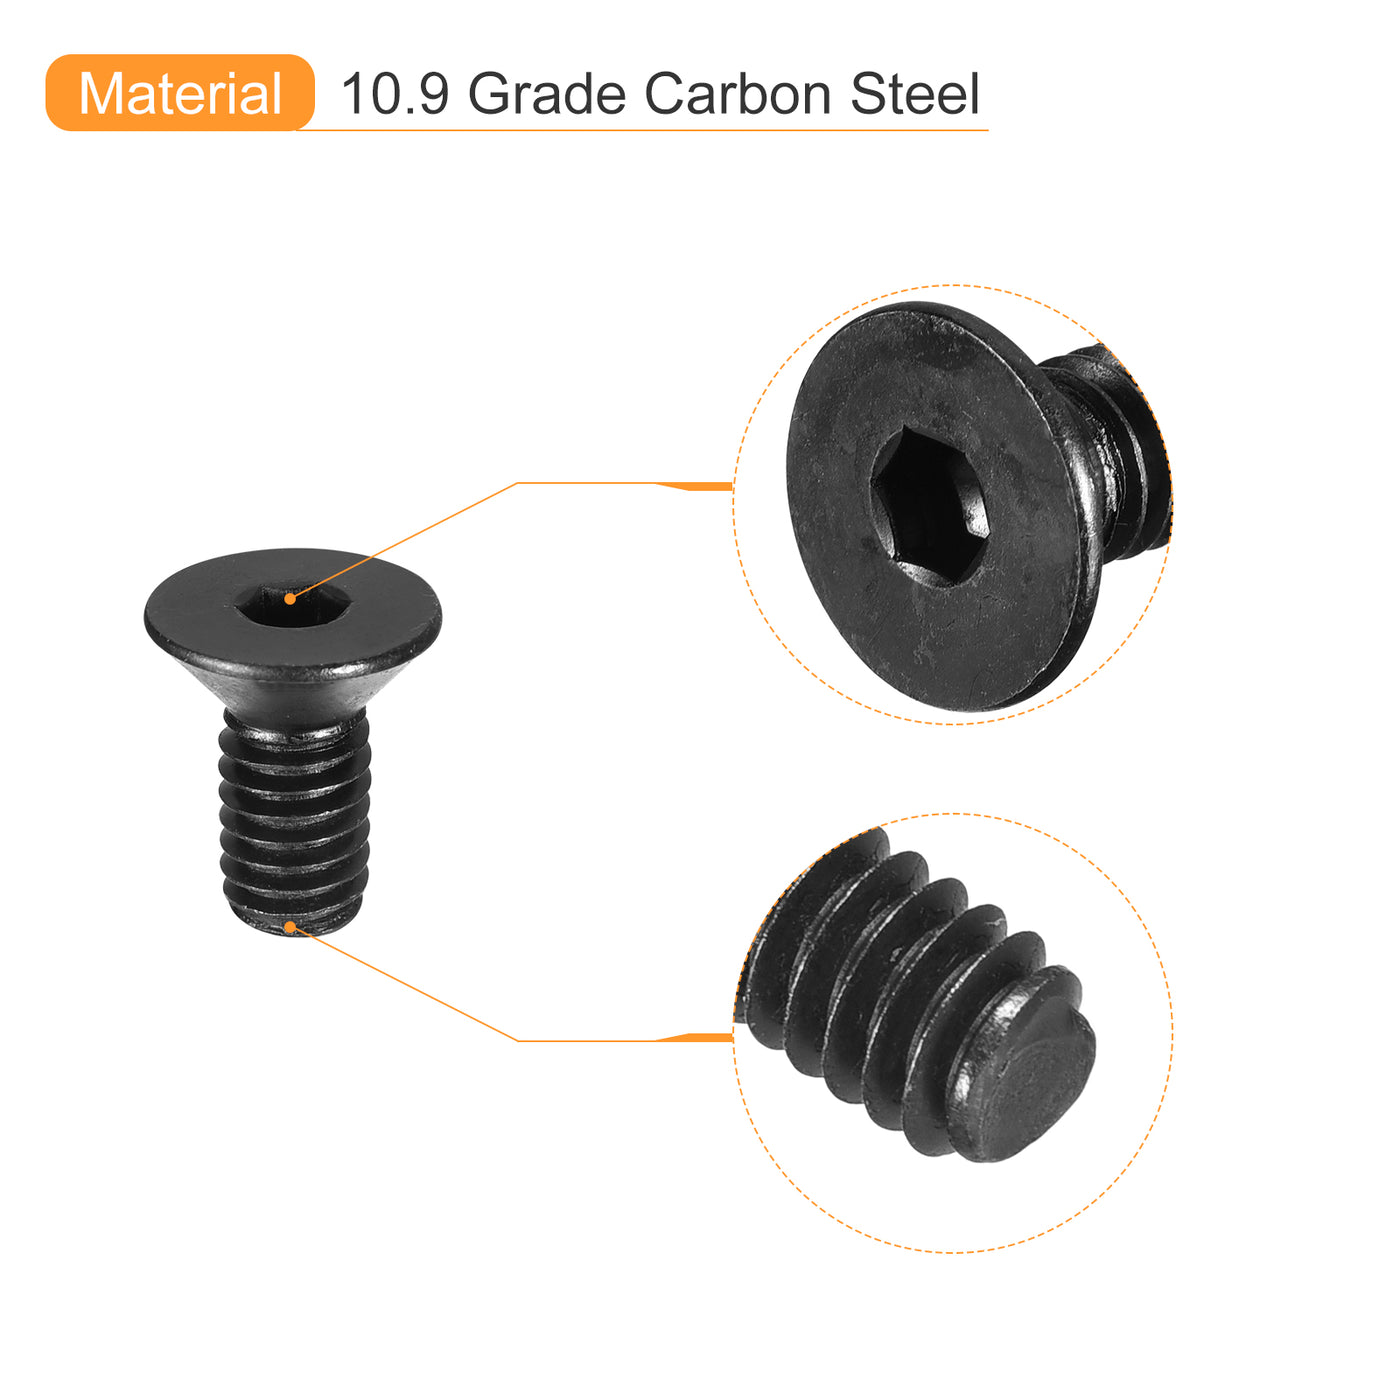 uxcell Uxcell 5/16-18x5/8" Flat Head Socket Cap Screws, 10.9 Grade Carbon Steel, 25PCS